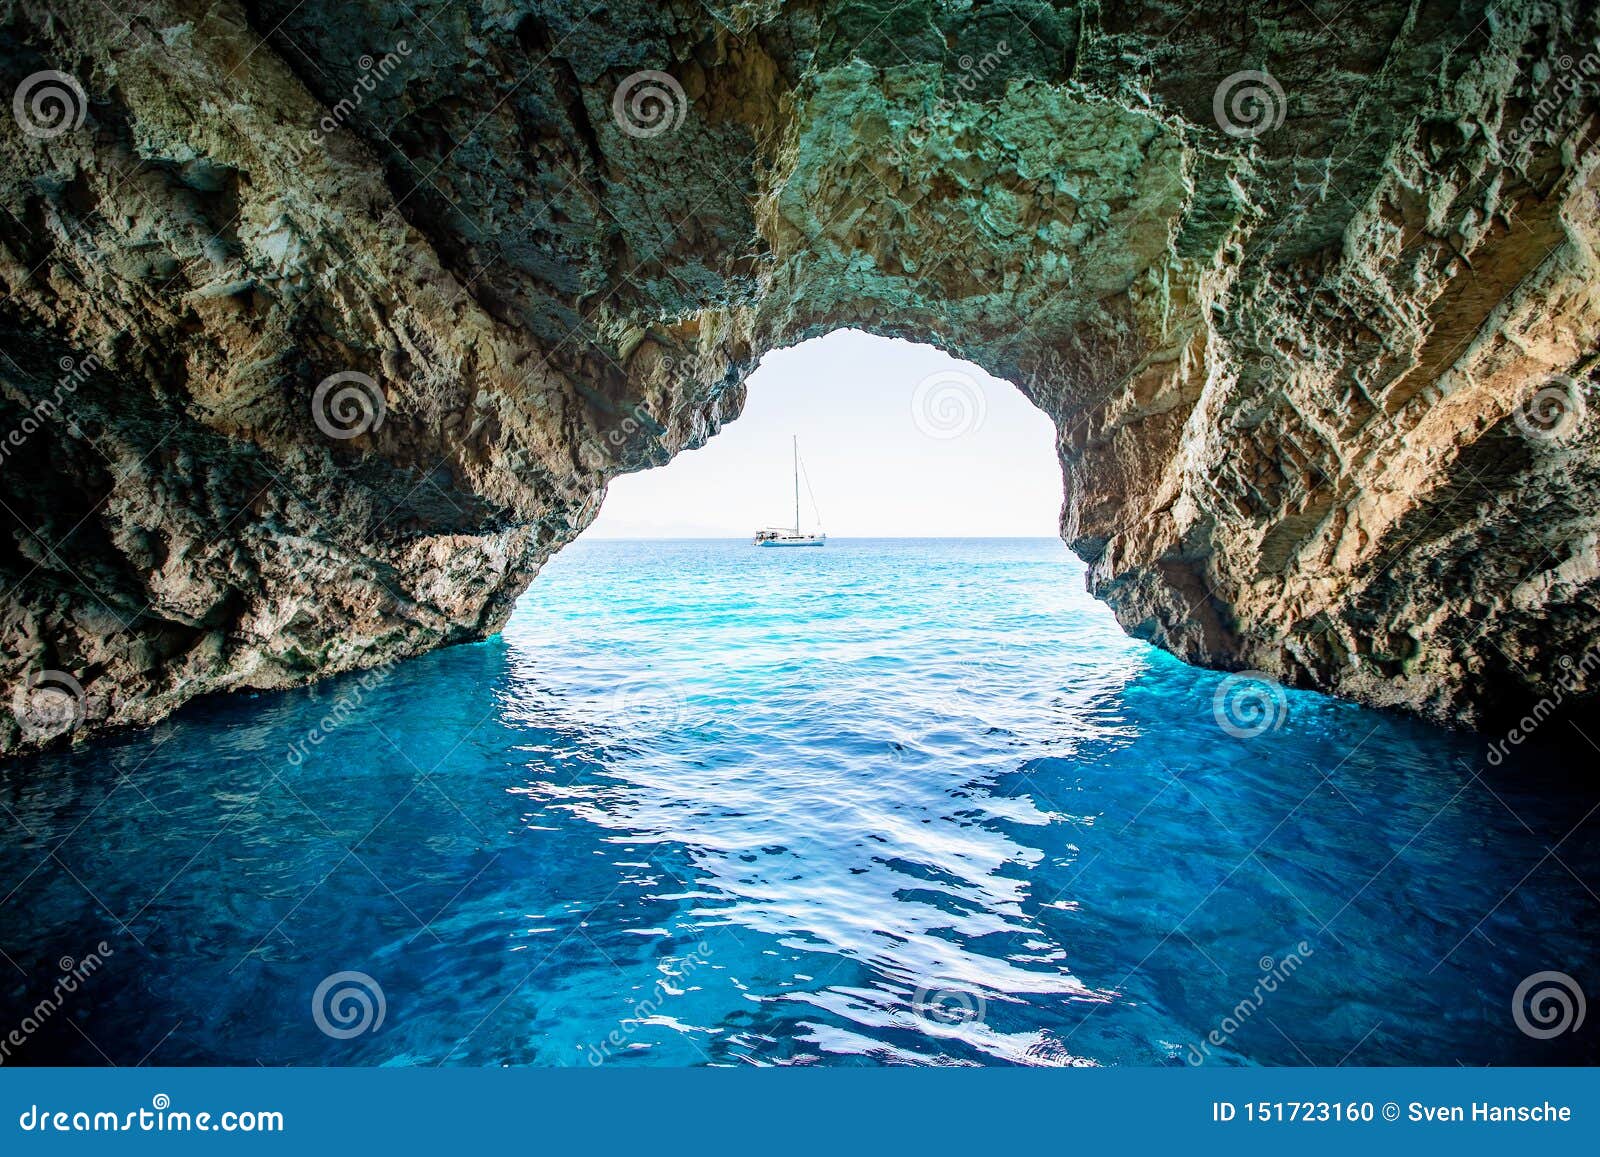 the famous blue caves on zakynthos island, ionian sea, greece